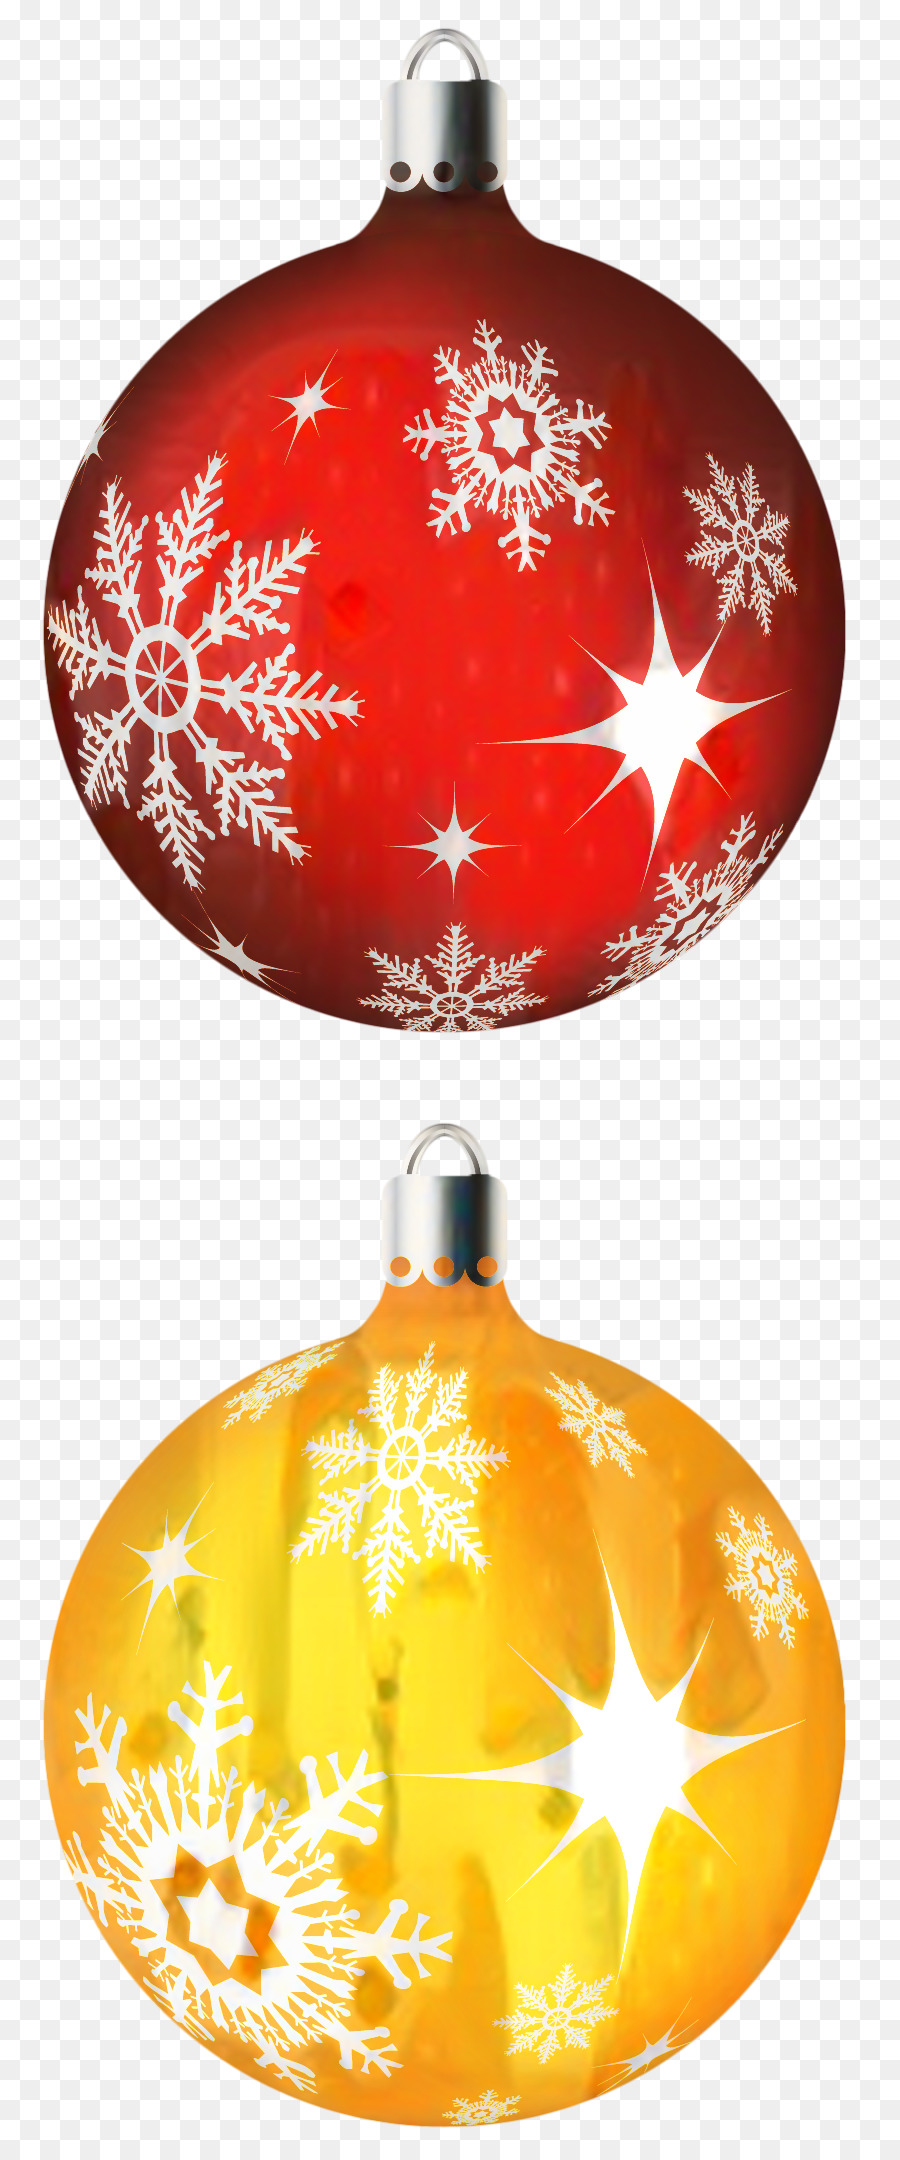 Santa Claus Christmas ornament Weihnachtstag Vektorgrafiken ClipArt - 